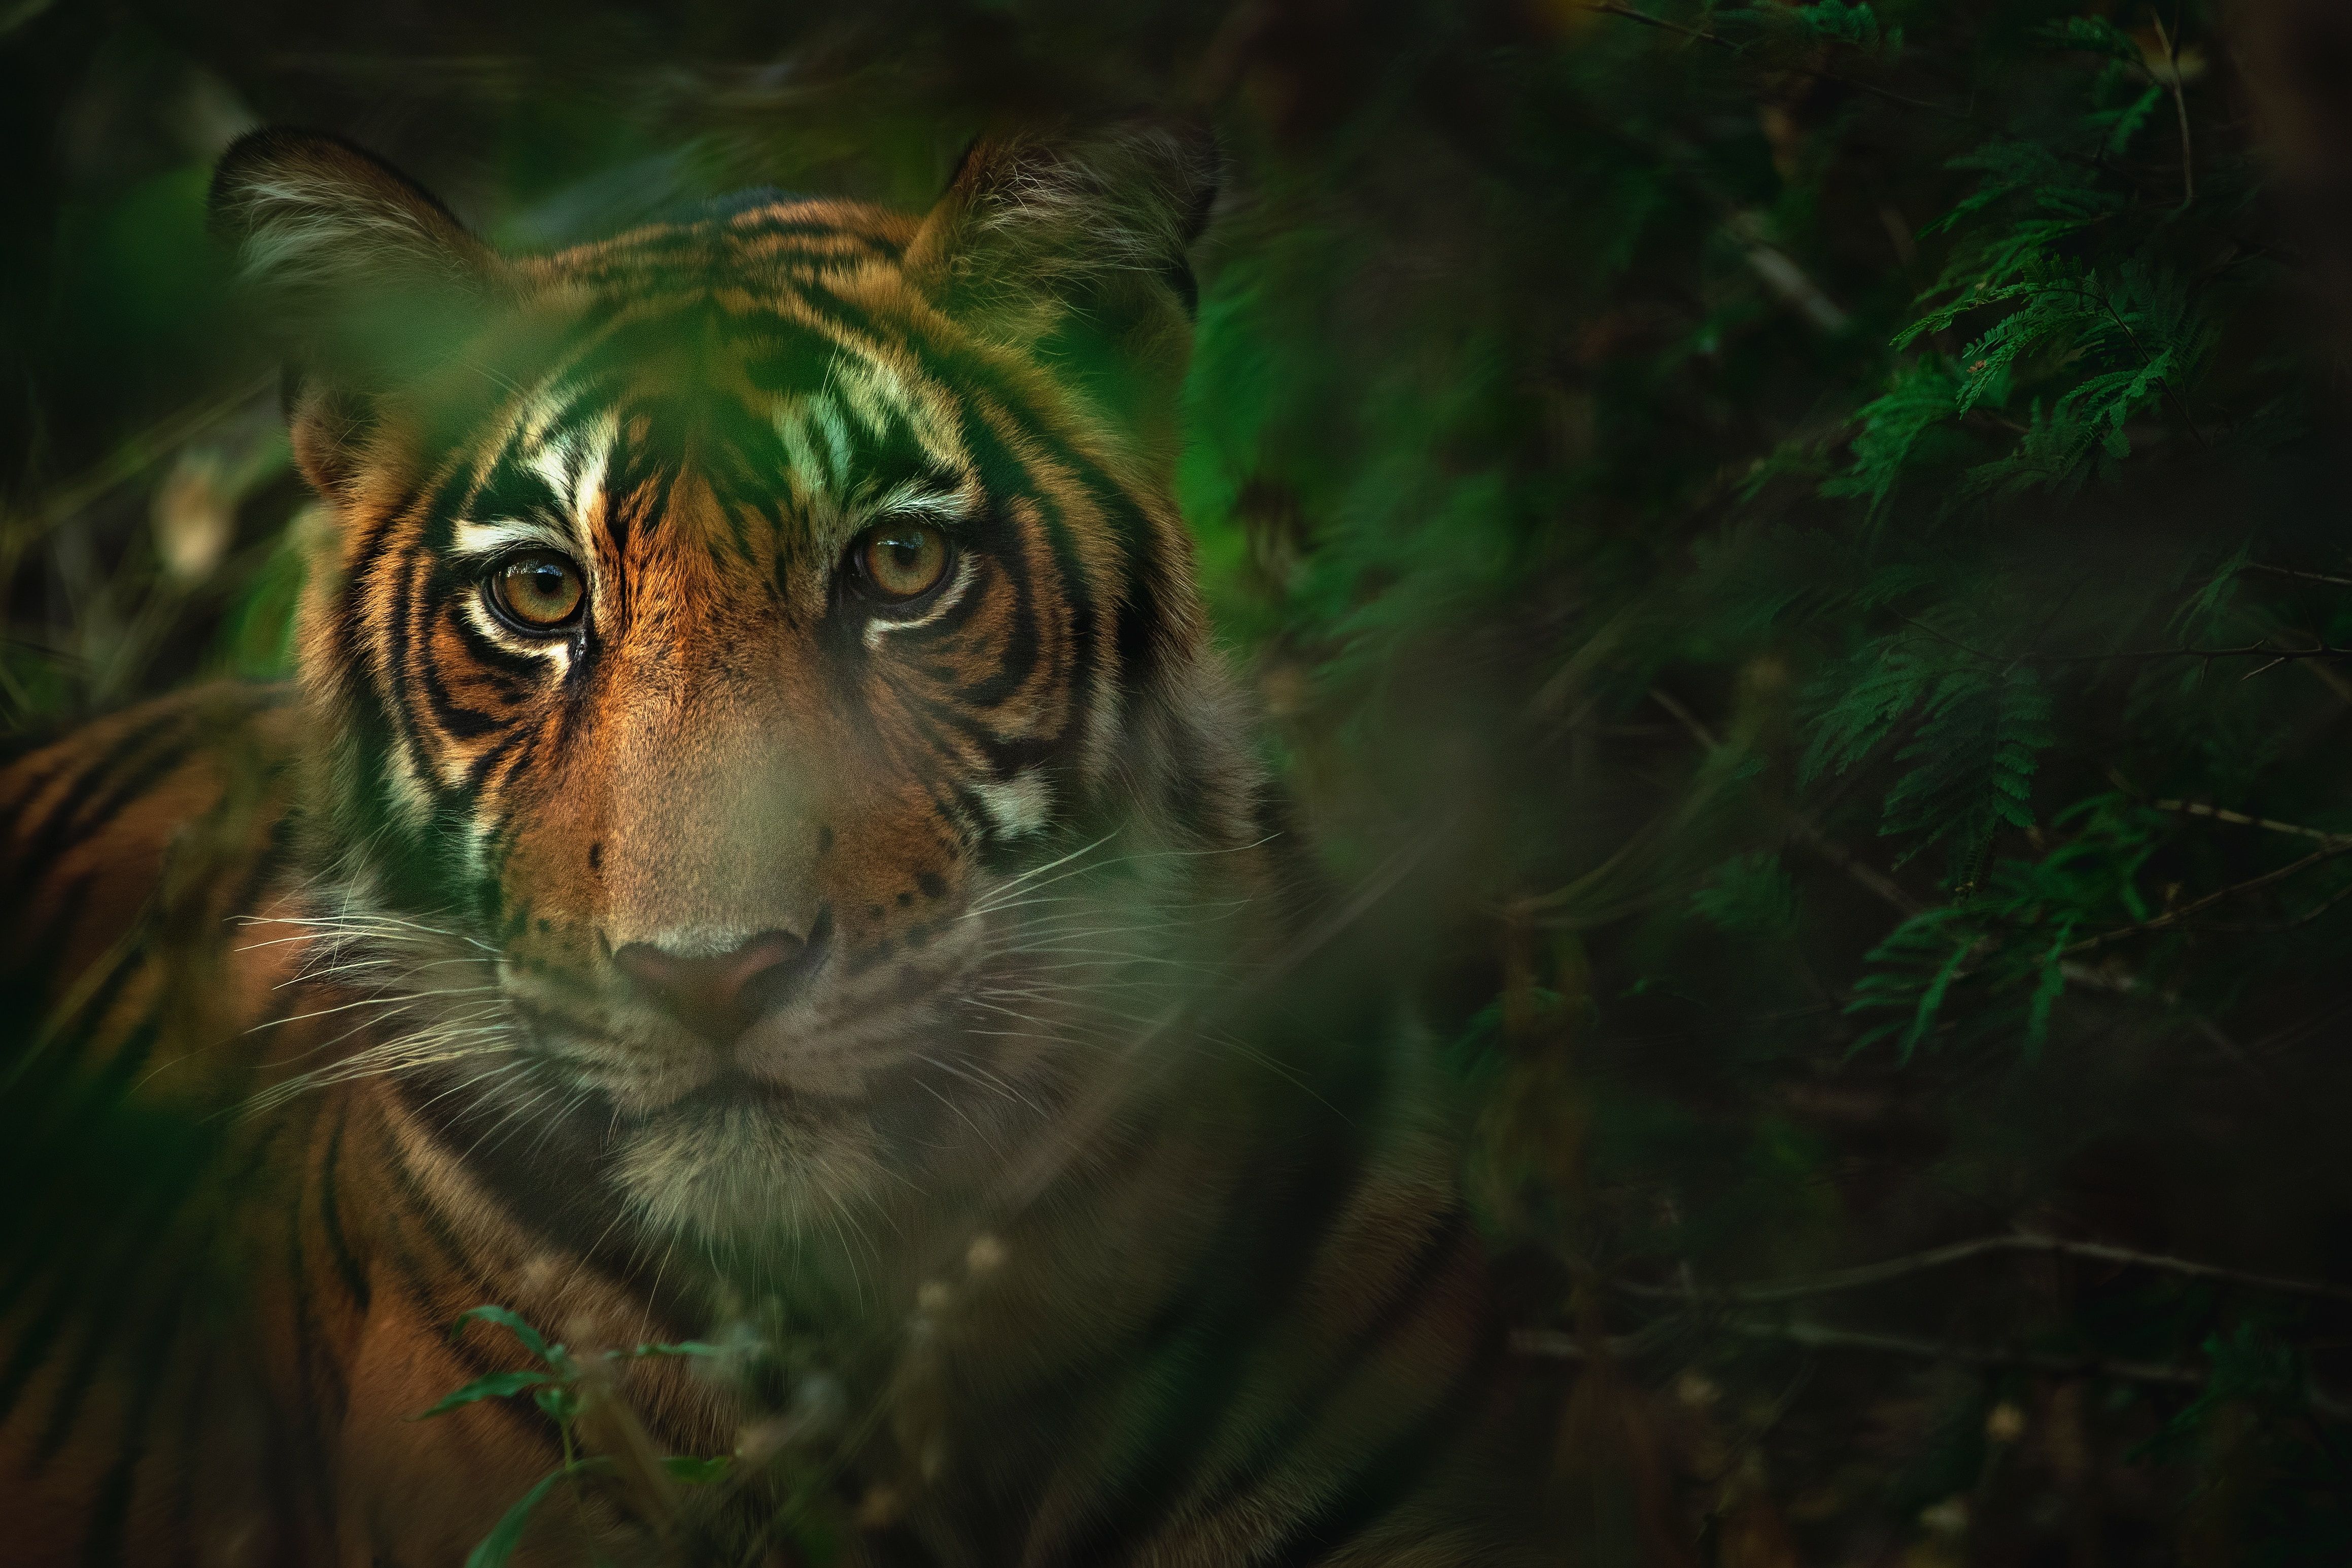 Tiger peering through leaves 